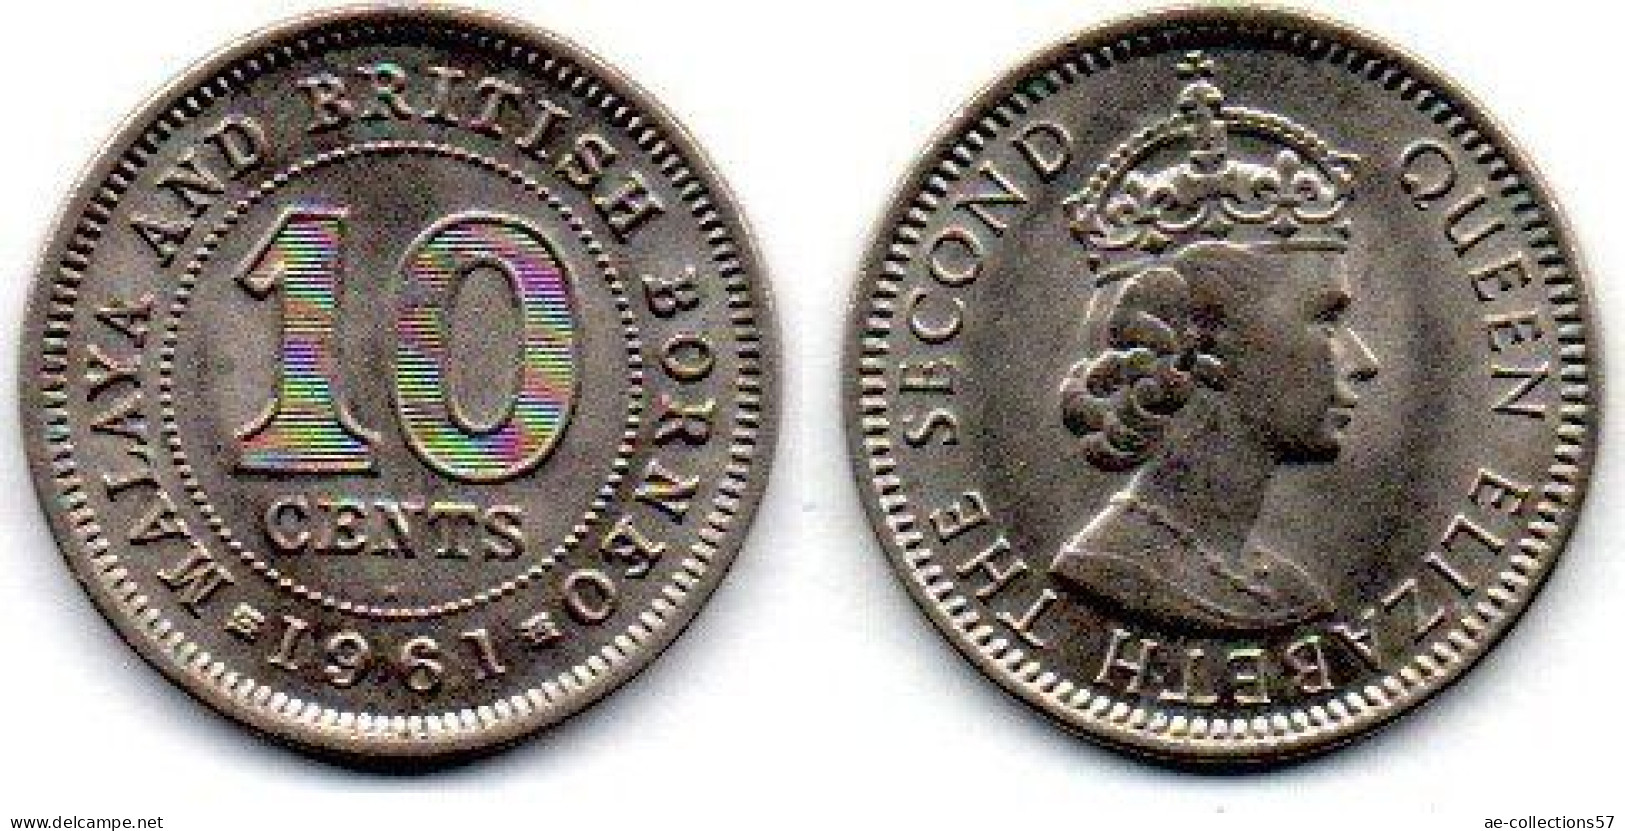 MA 24701 / British Bornéo 10 Cents 1961 H SUP - Colonies